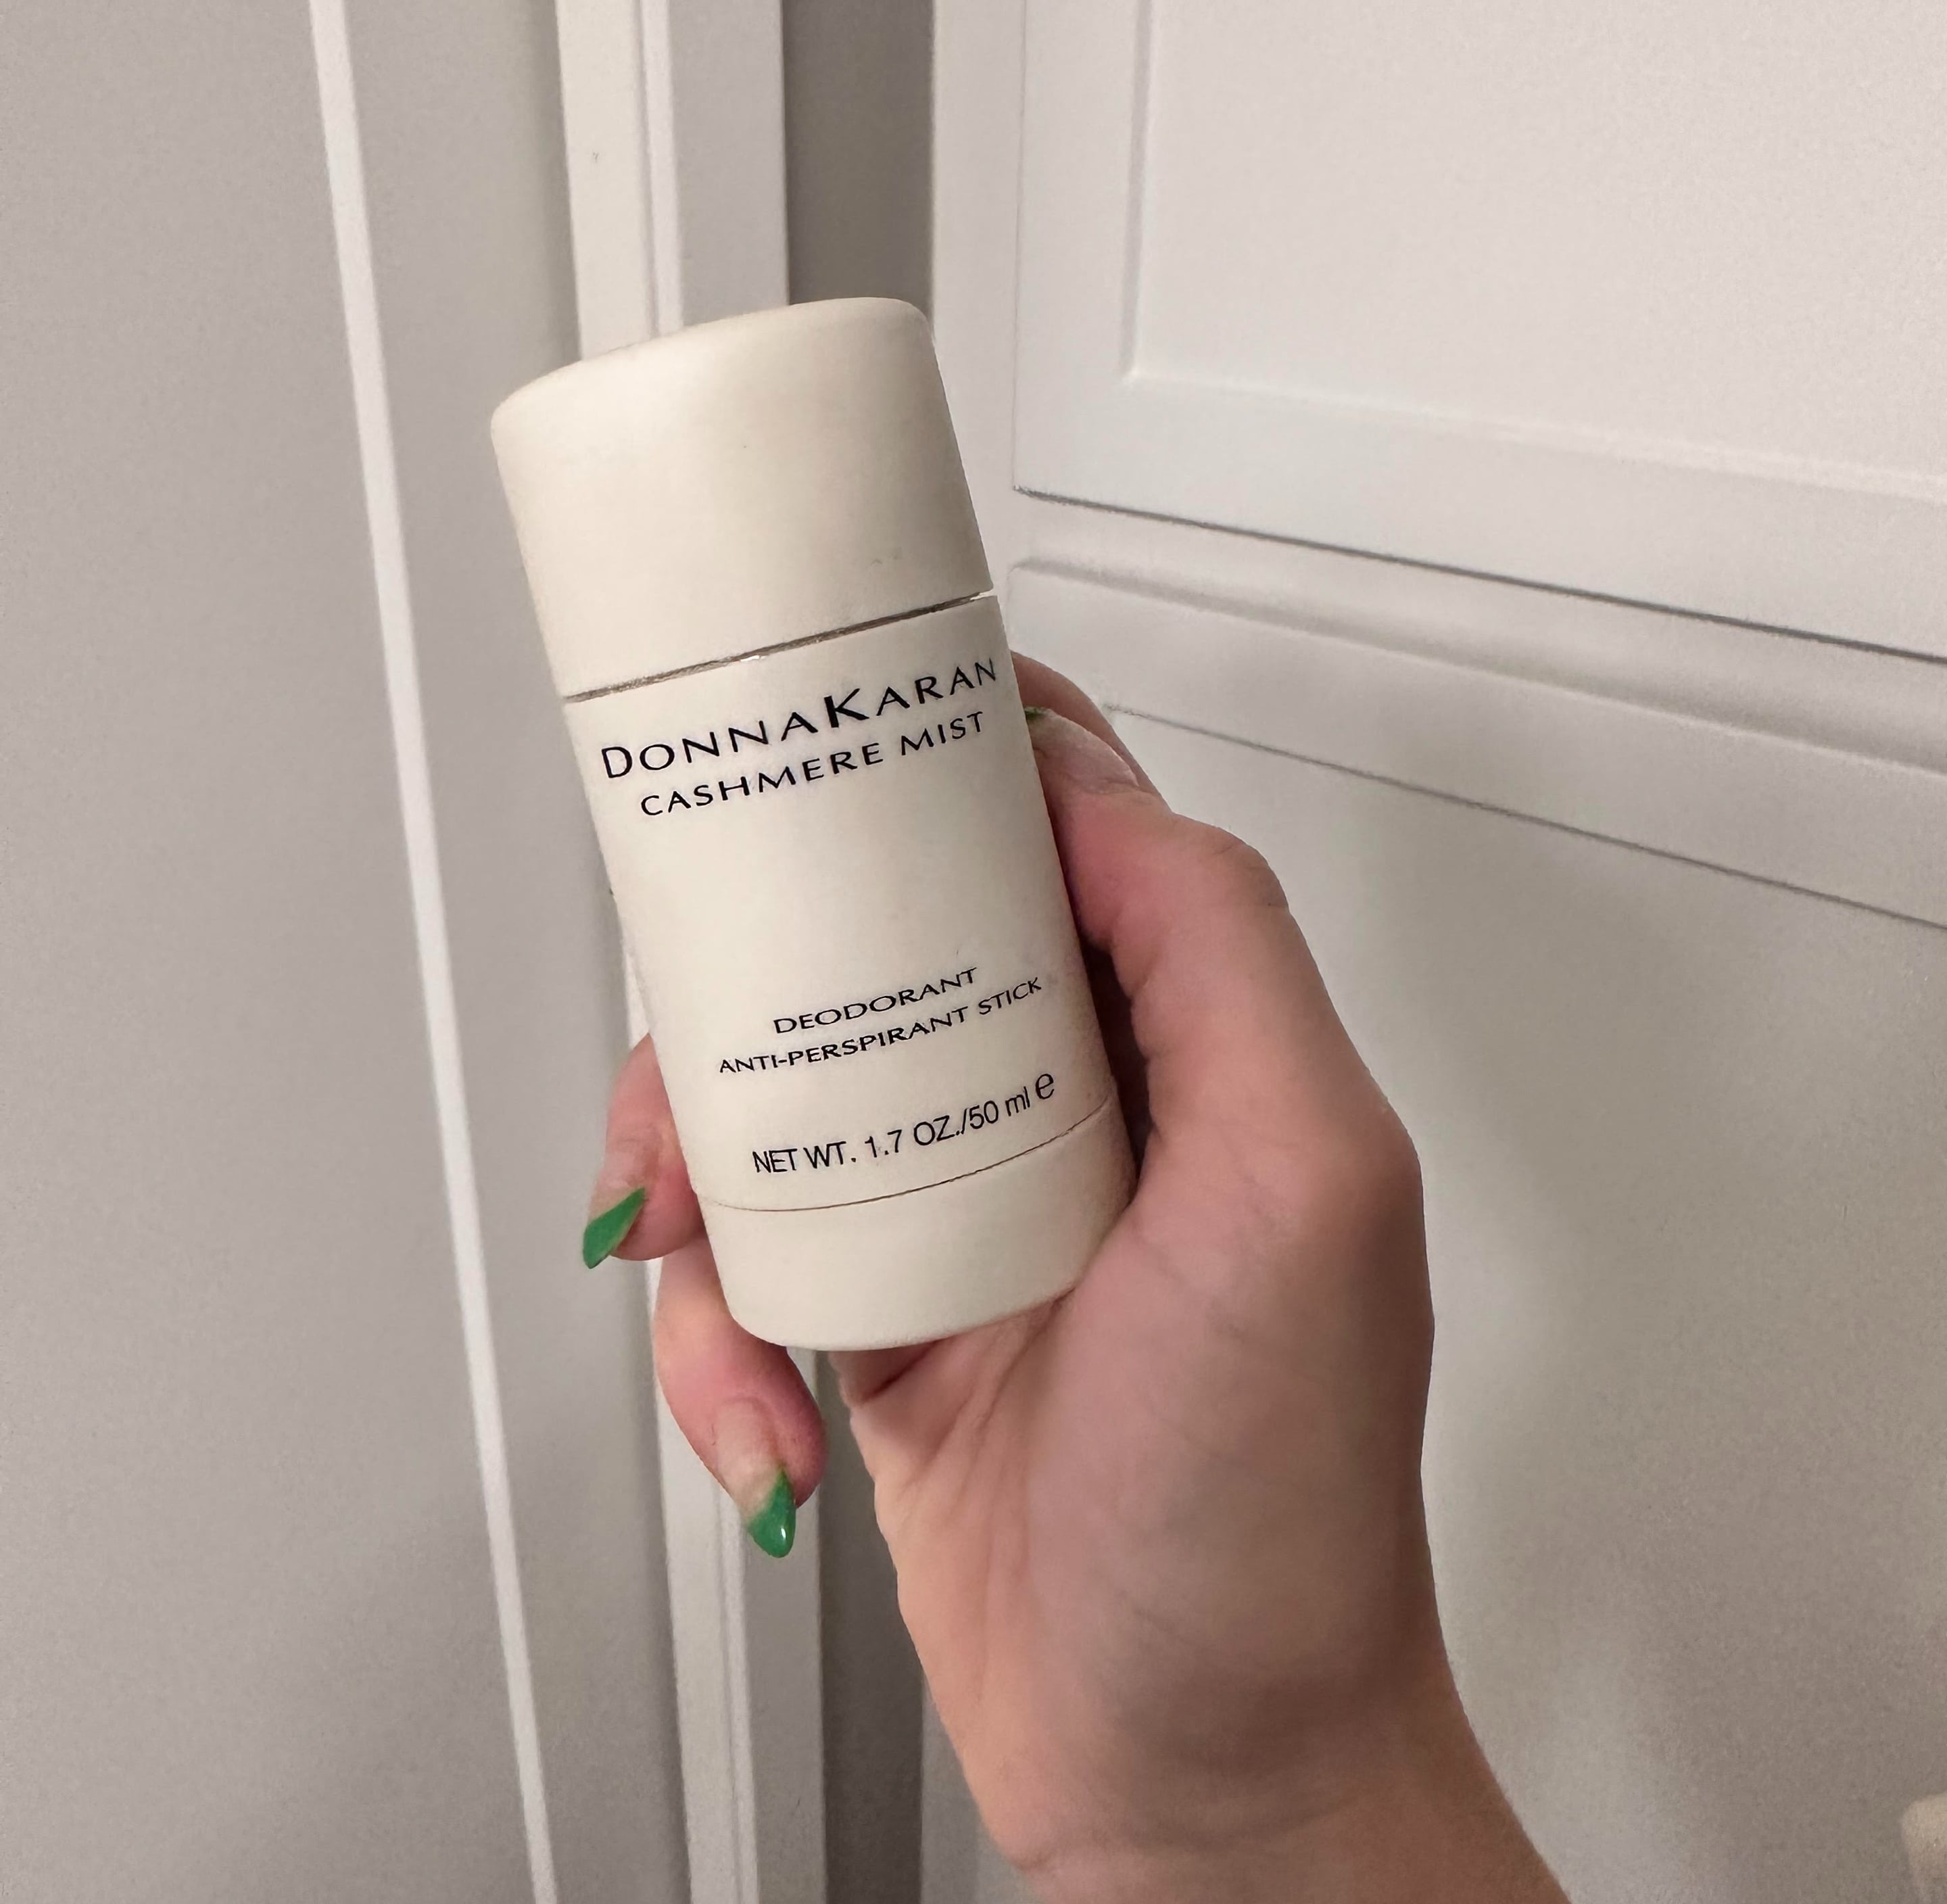 Donna Karan Cashmere Mist Anti-Perspirant Deodorant, Review